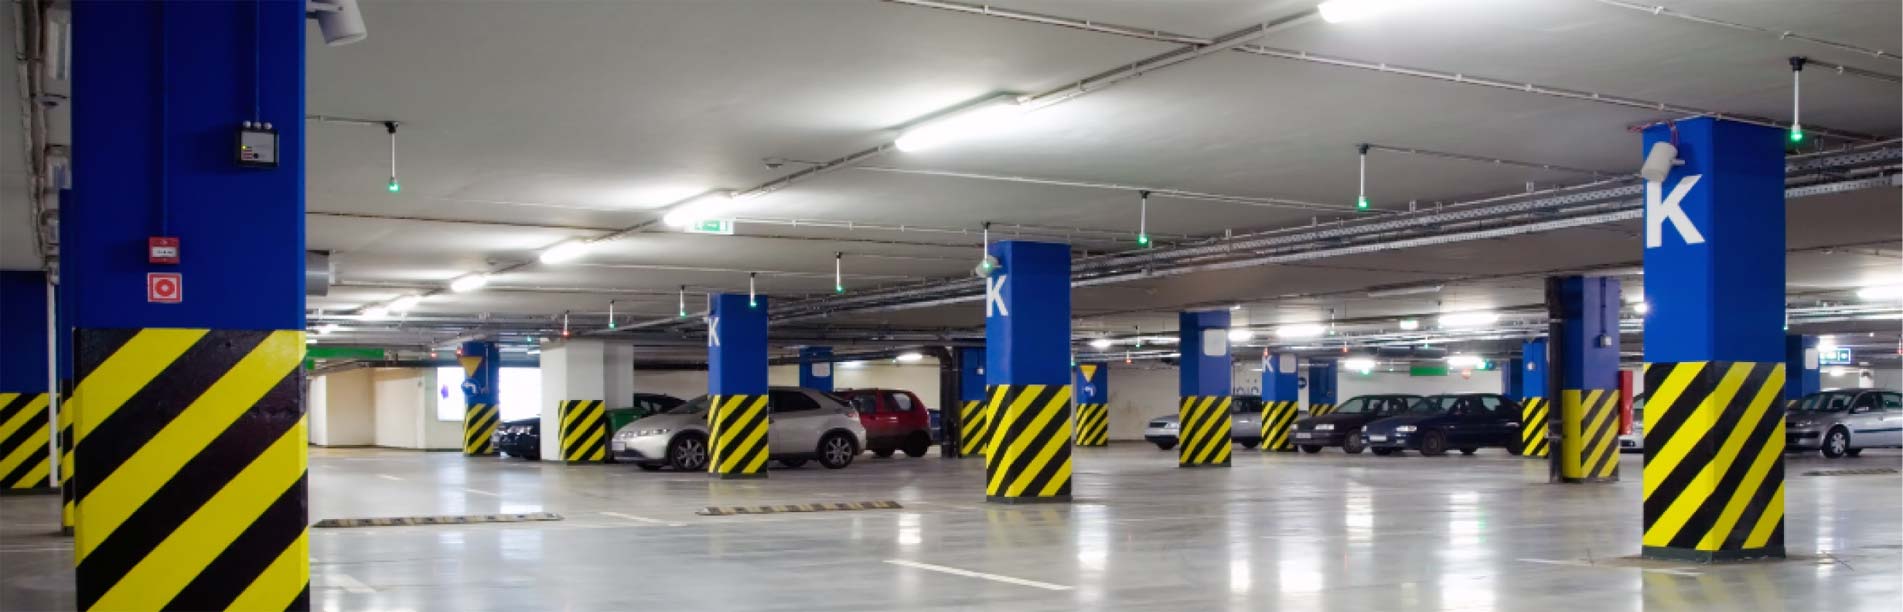 Parking Garage Gas Detection System